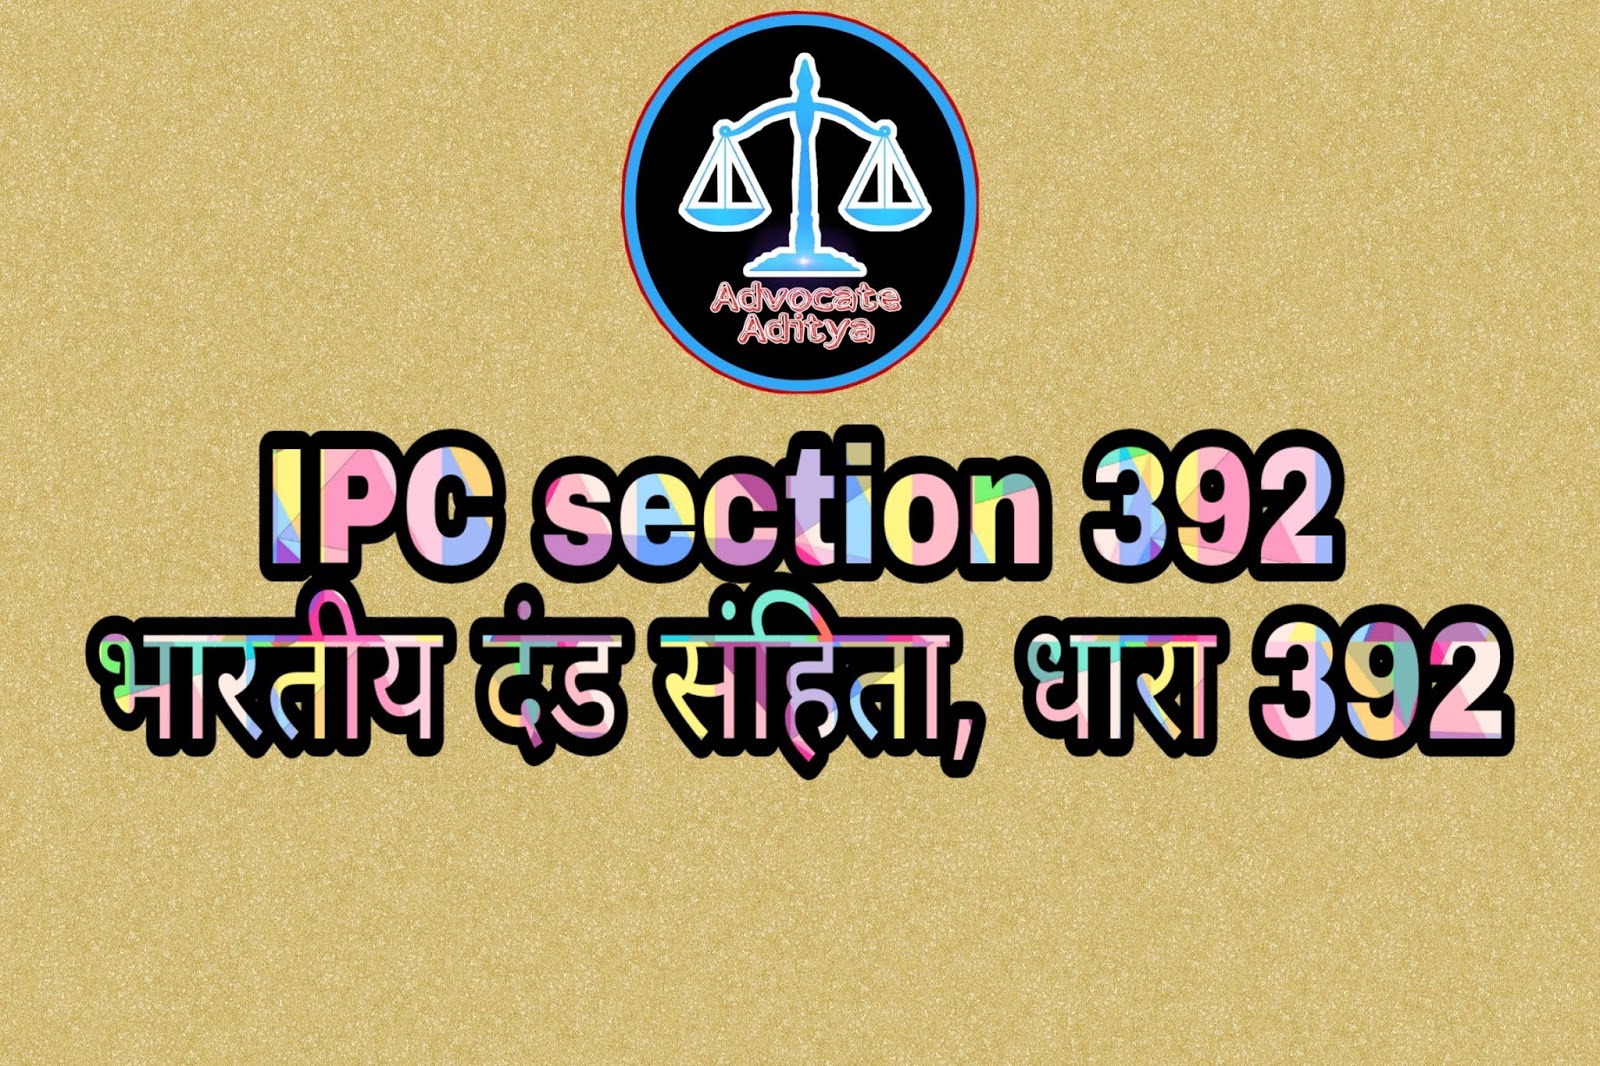 section 392 ipc